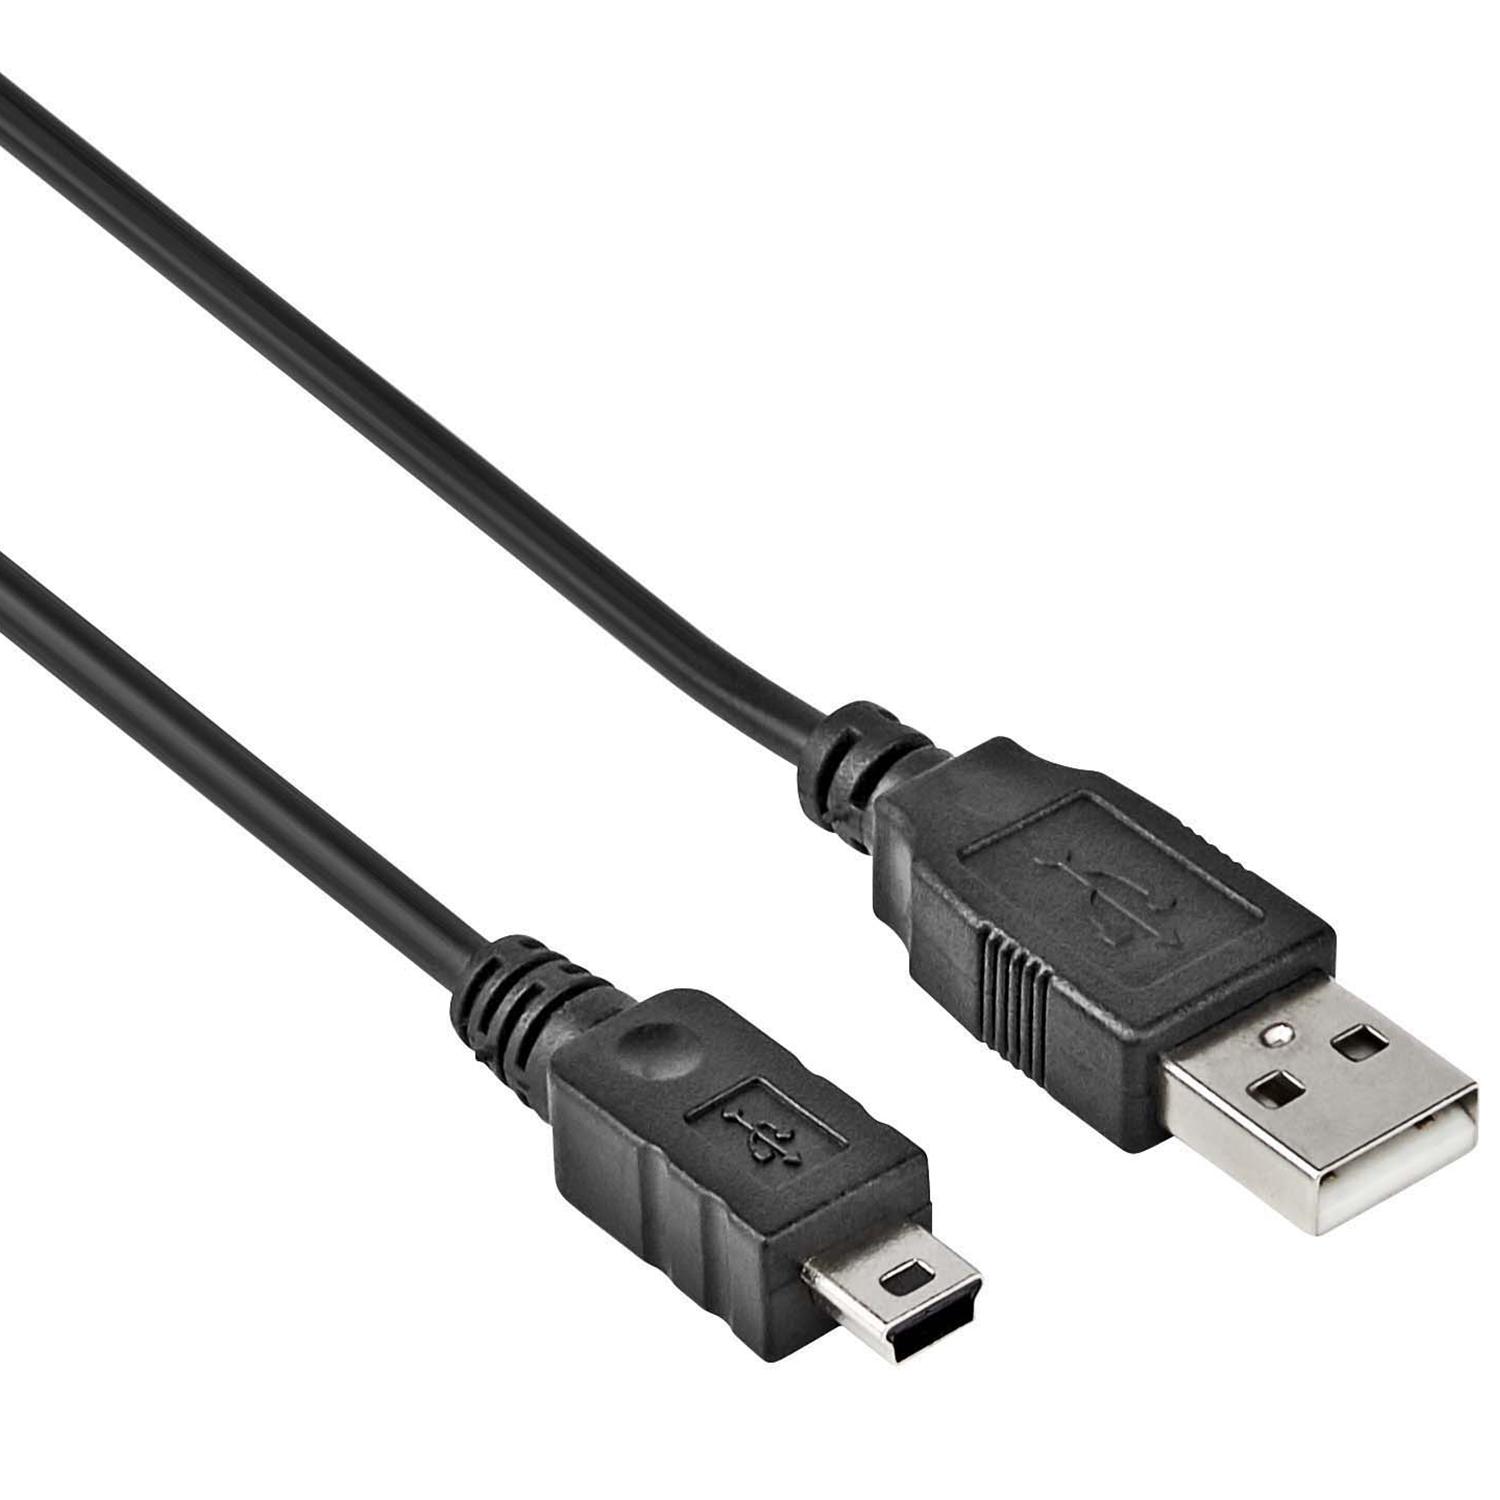 Mini USB kabel - 2.0 - HighSpeed